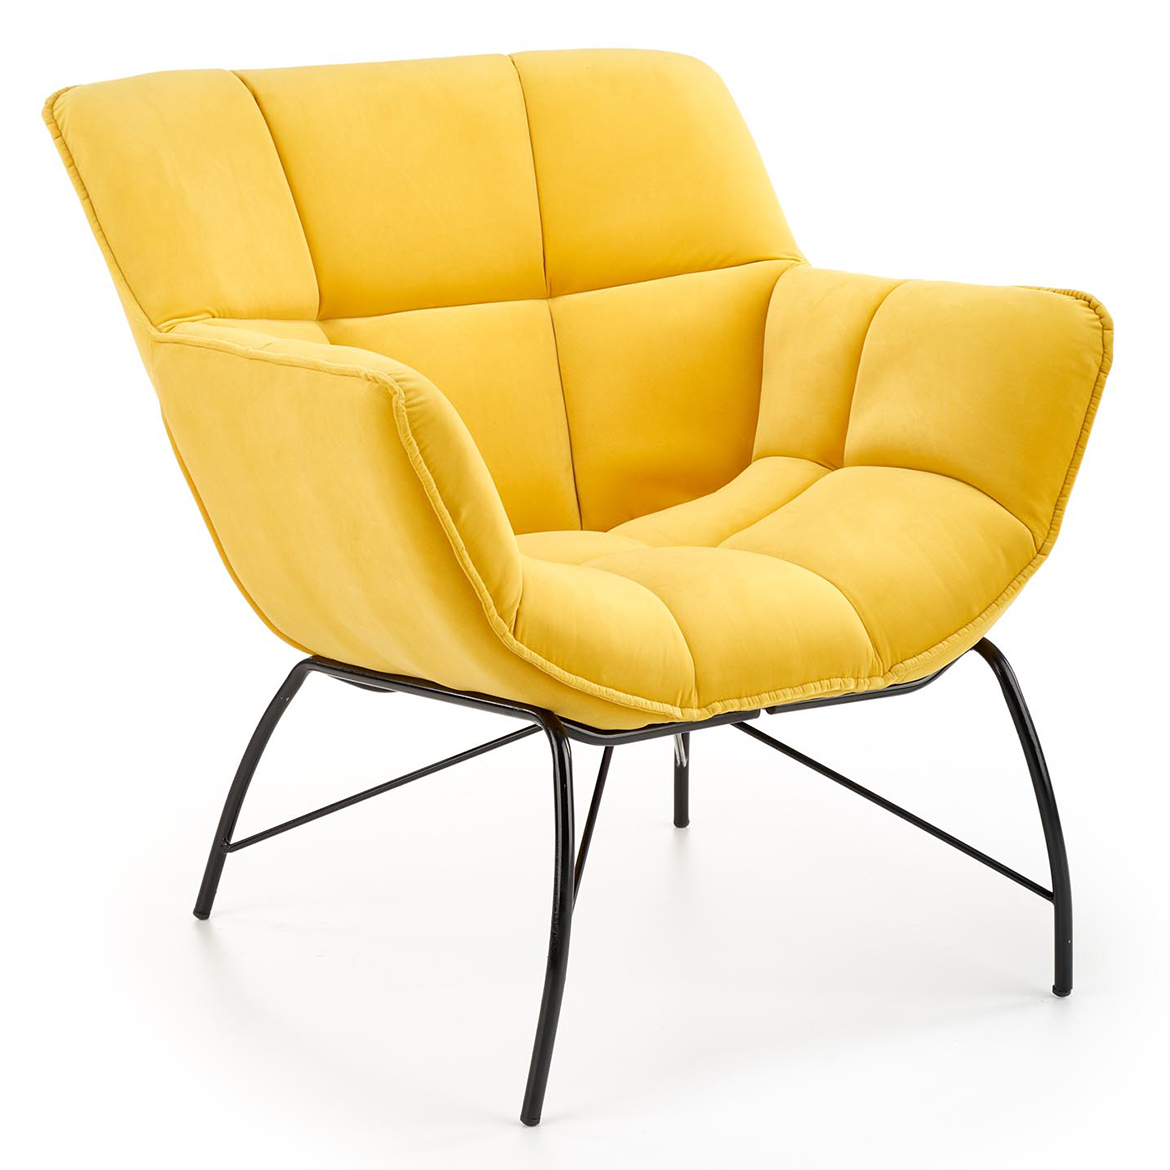 Sessel Belton gelb/schwarz,6